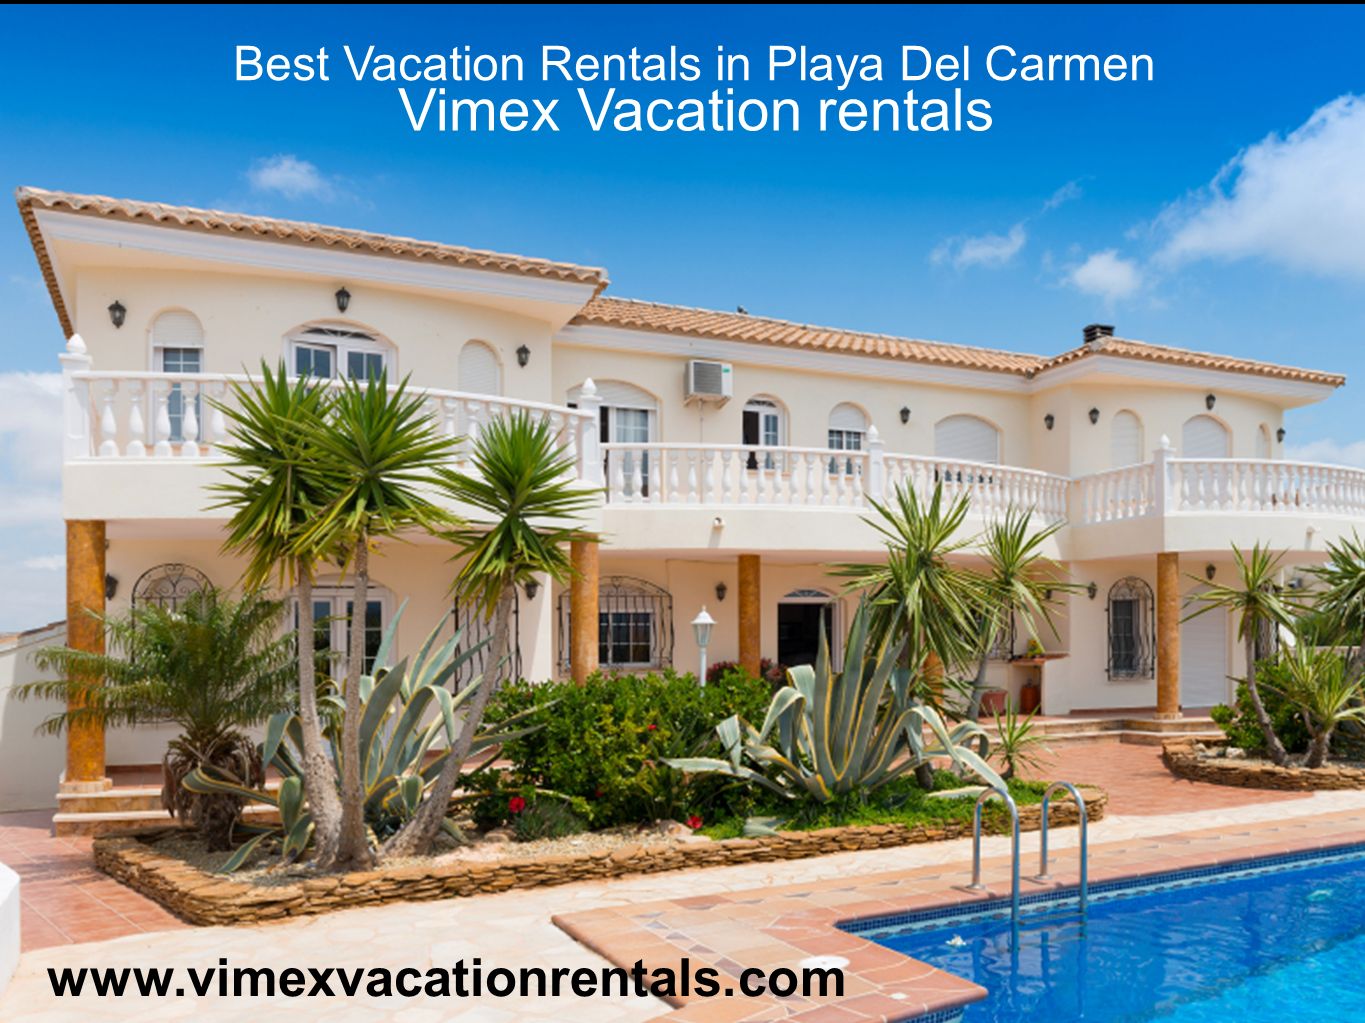 Vimex Vacation rentals Best Vacation Rentals in Playa Del Carmen